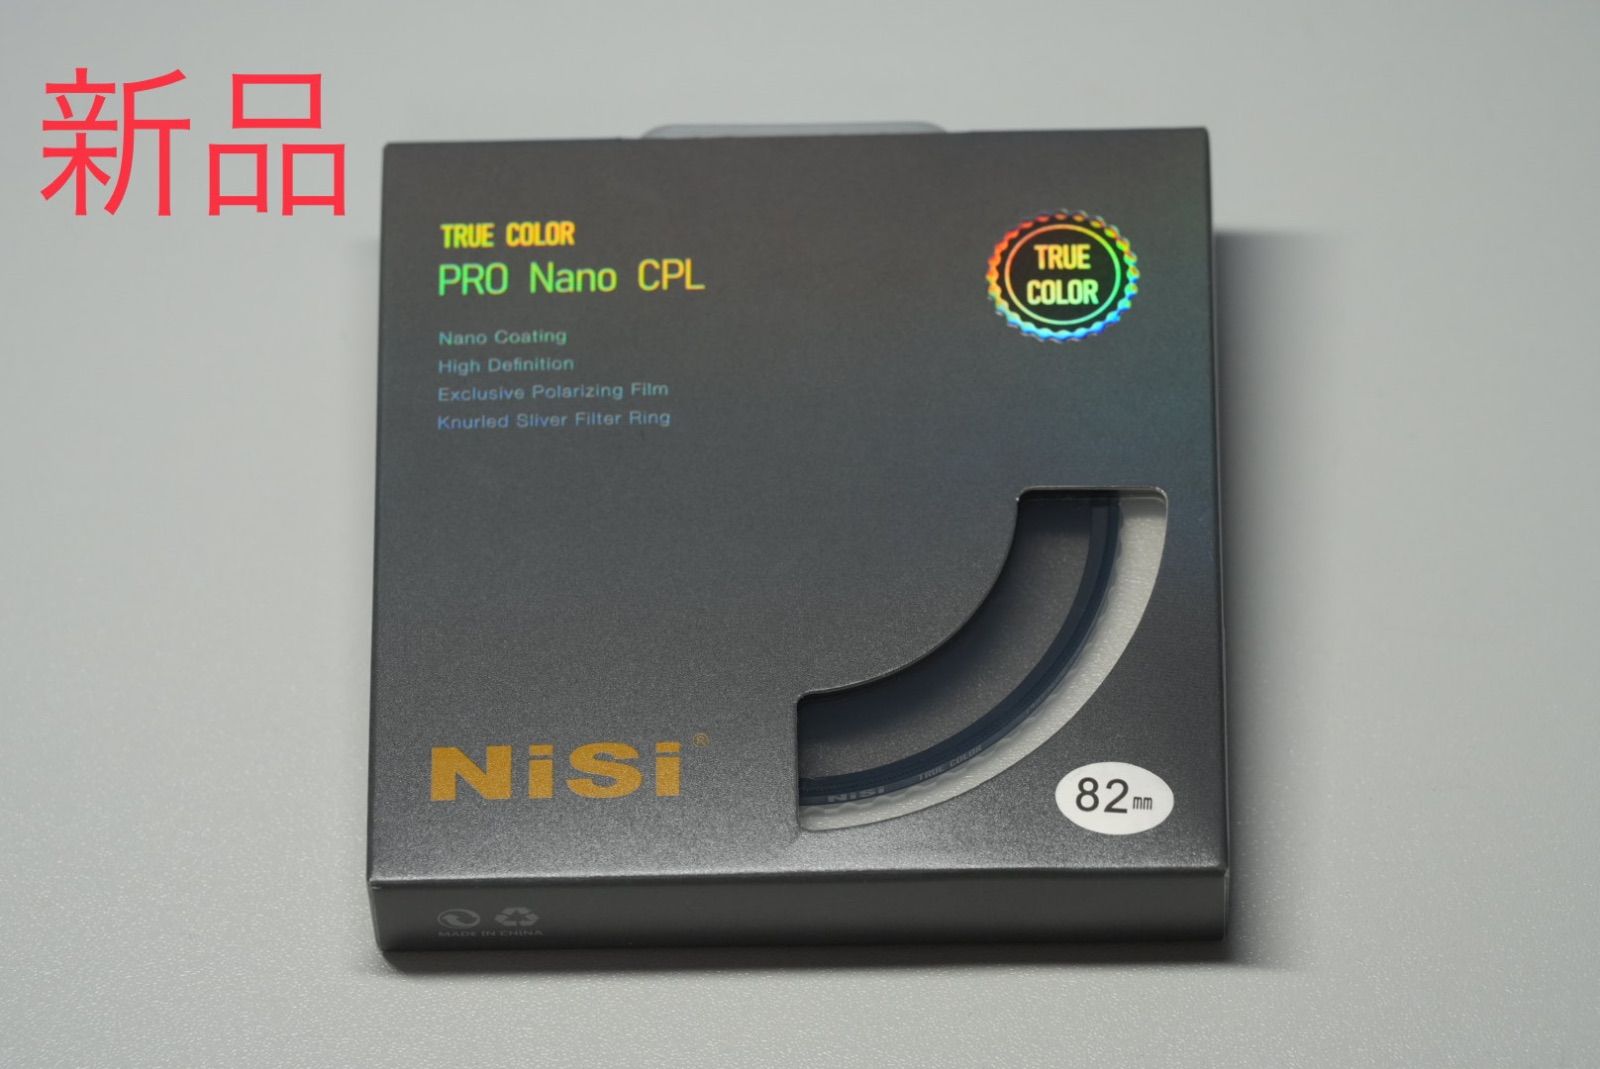 NiSi 偏光フィルター True Color CPL 82mm - メルカリ